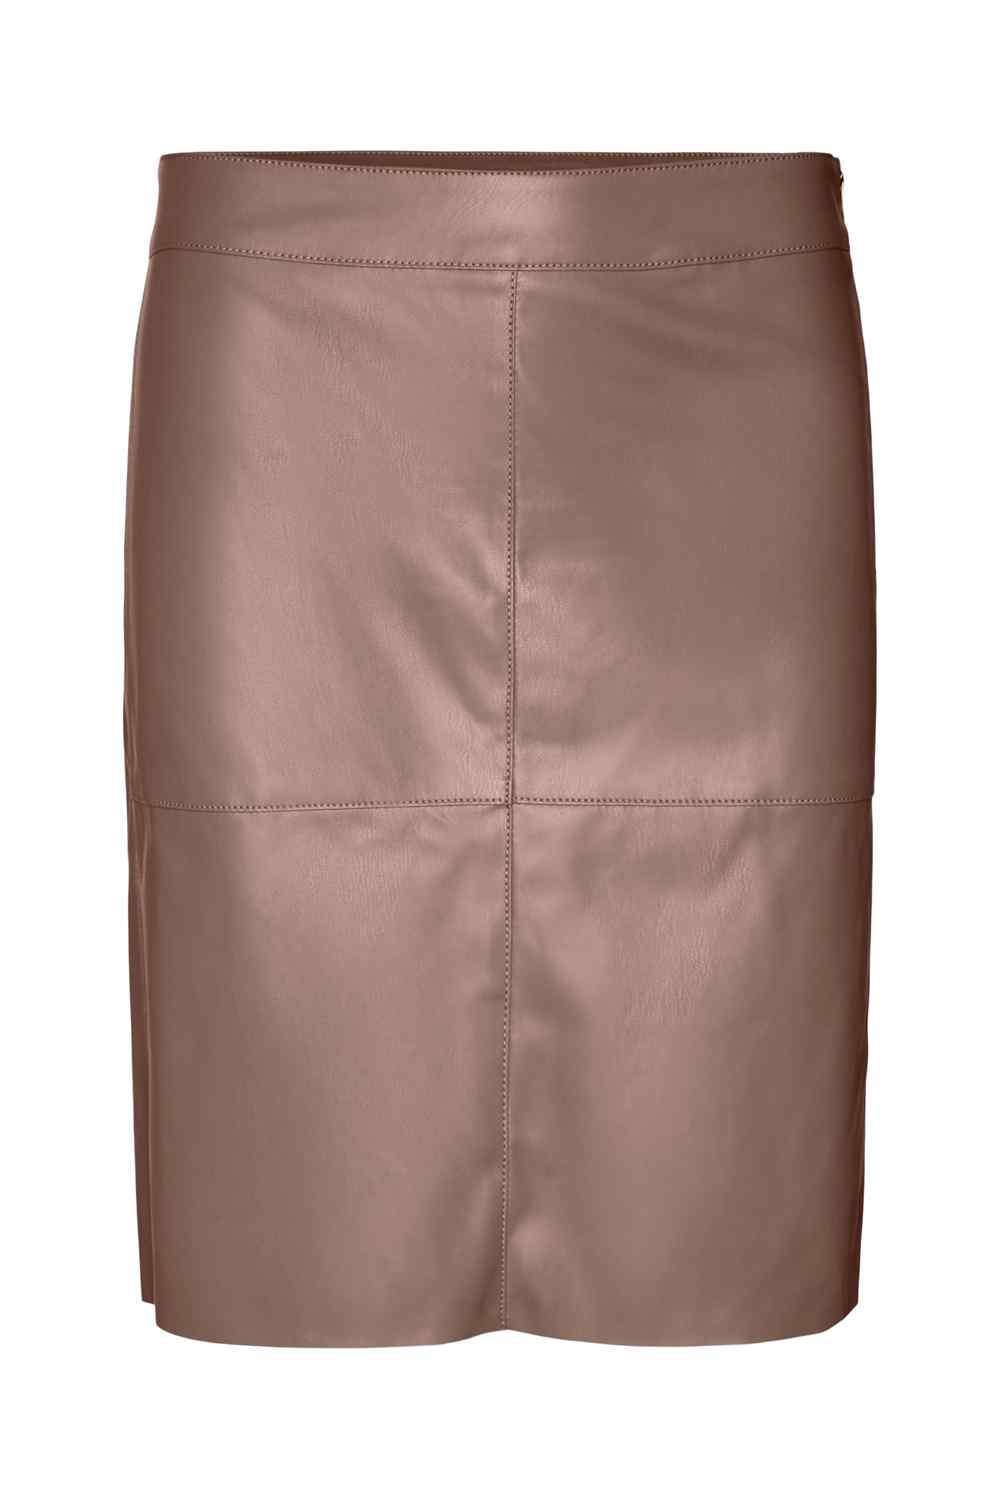 Vero Moda Olympia Skirt 1 Shaws Department Stores